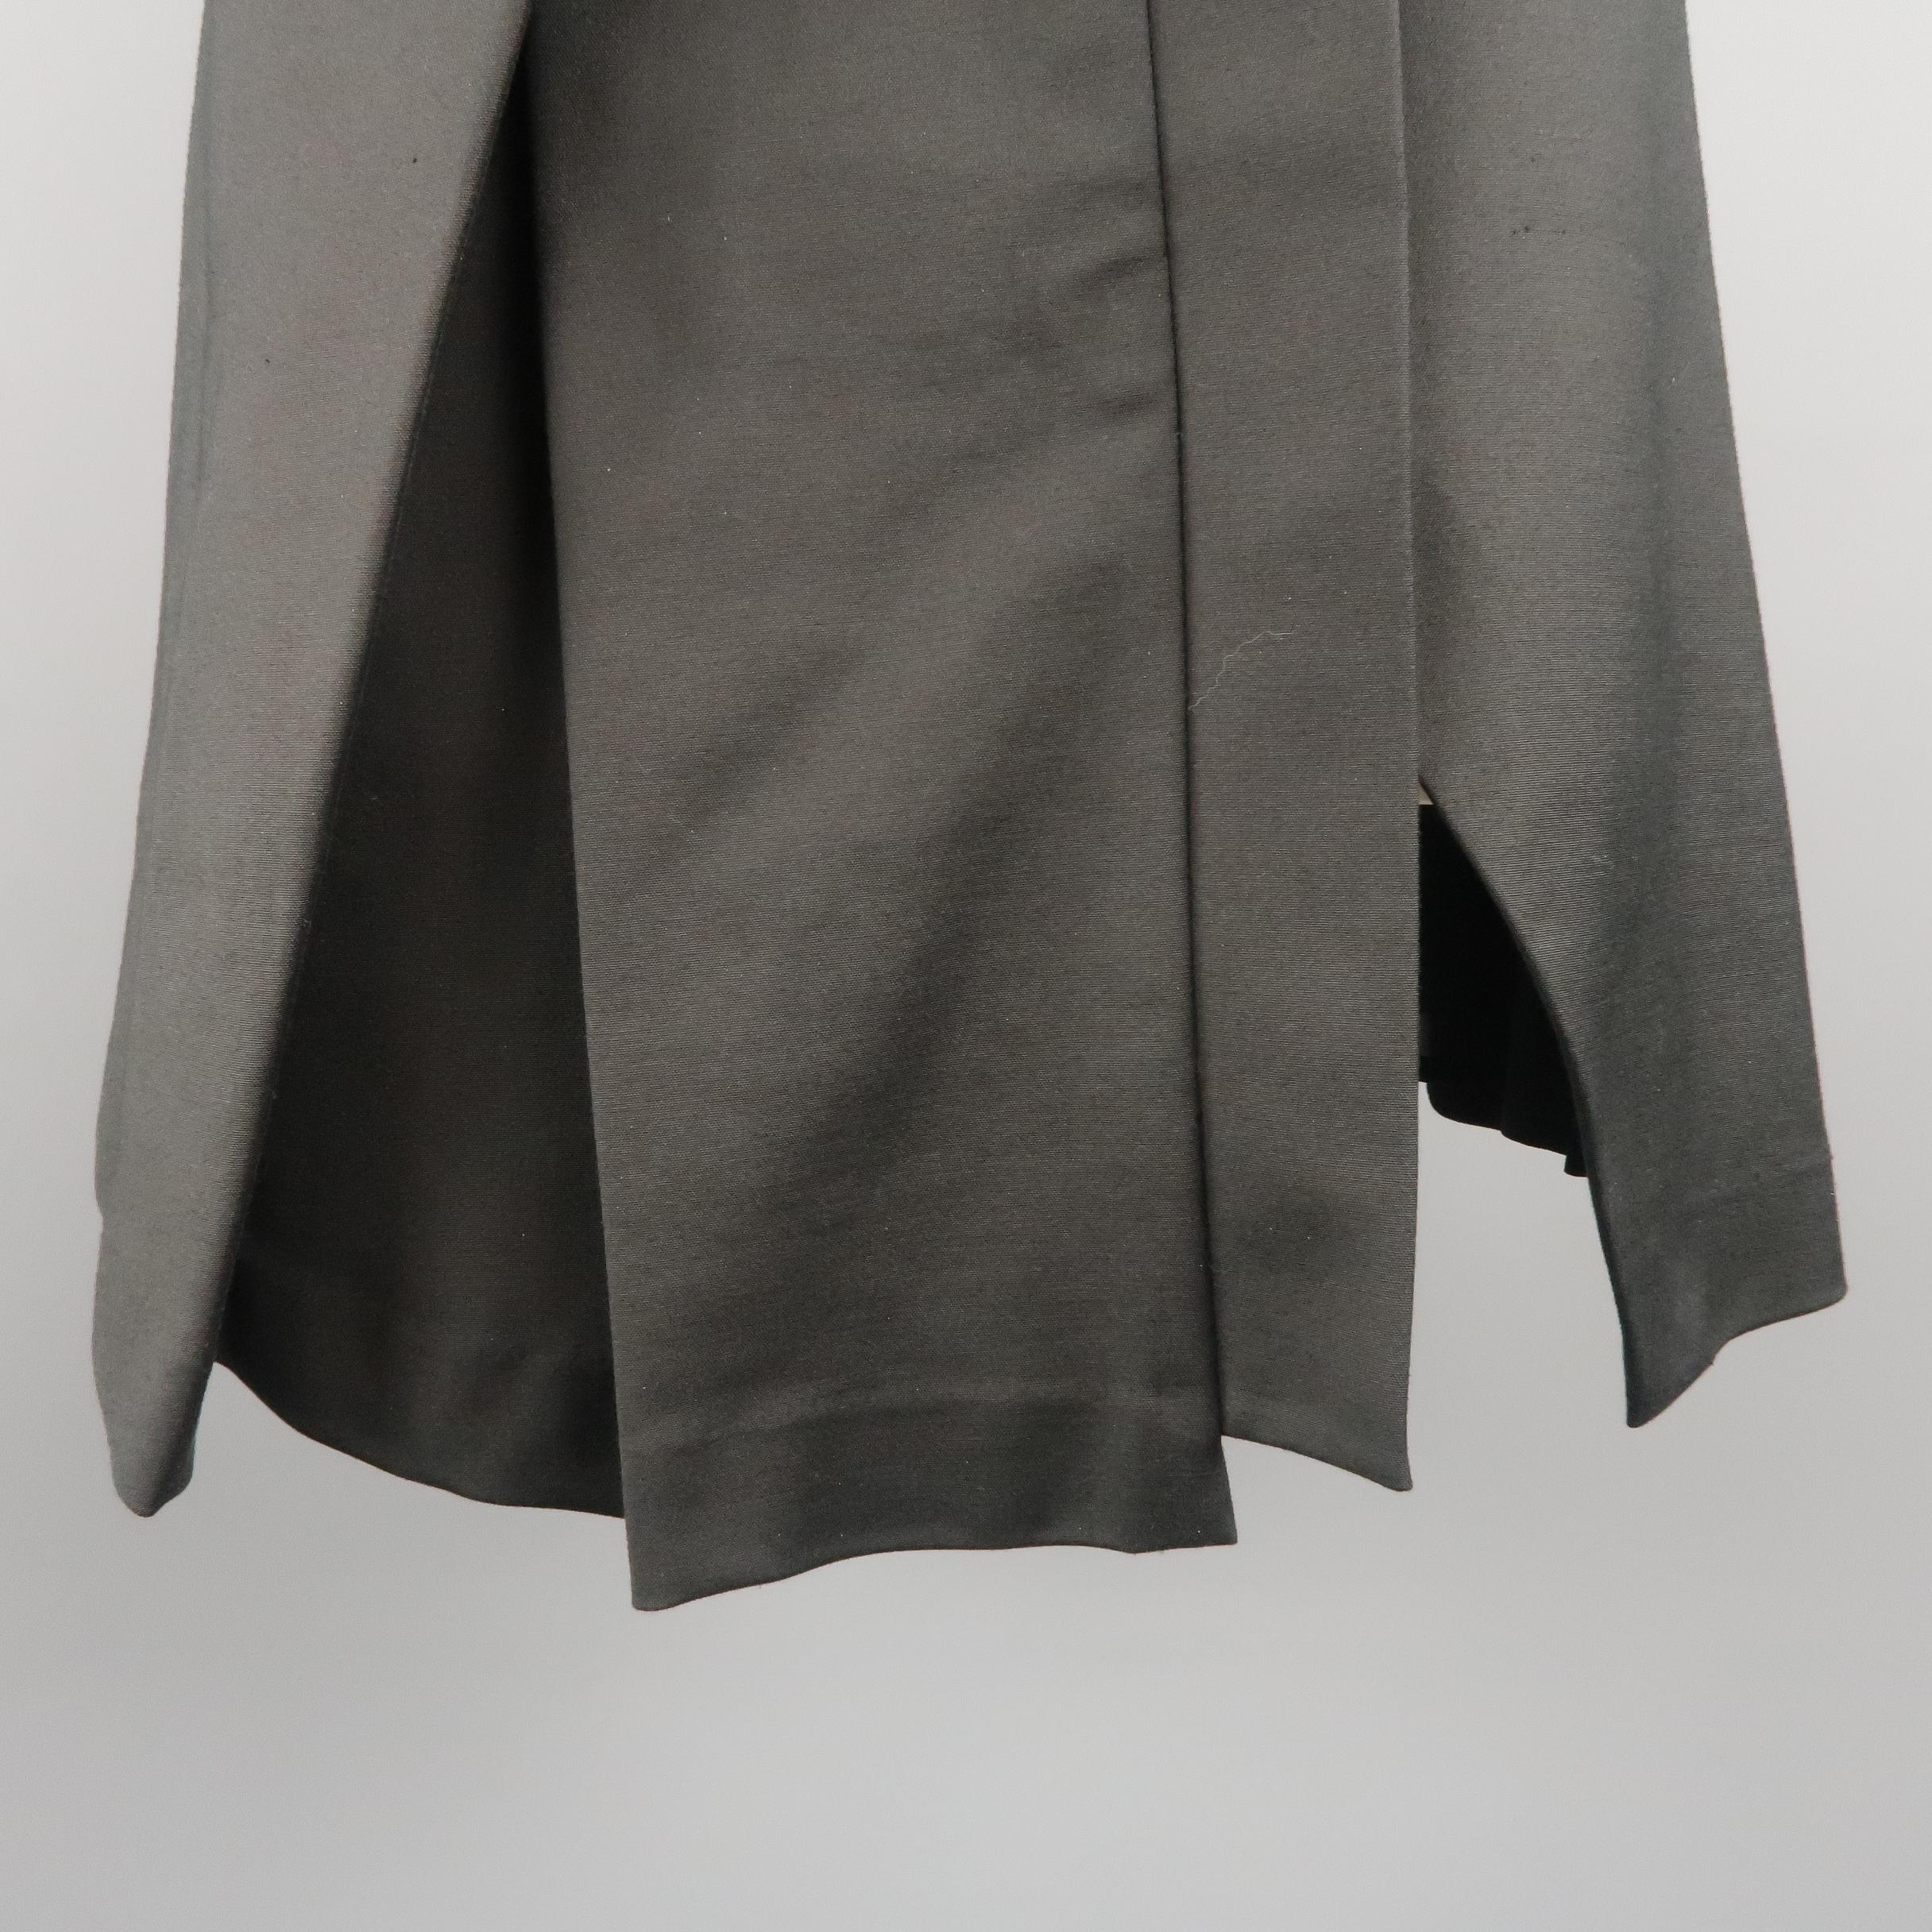 Women's VERSUS by GIANNI VERSACE Size 6 Black Cotton Asymmetrical Skirt